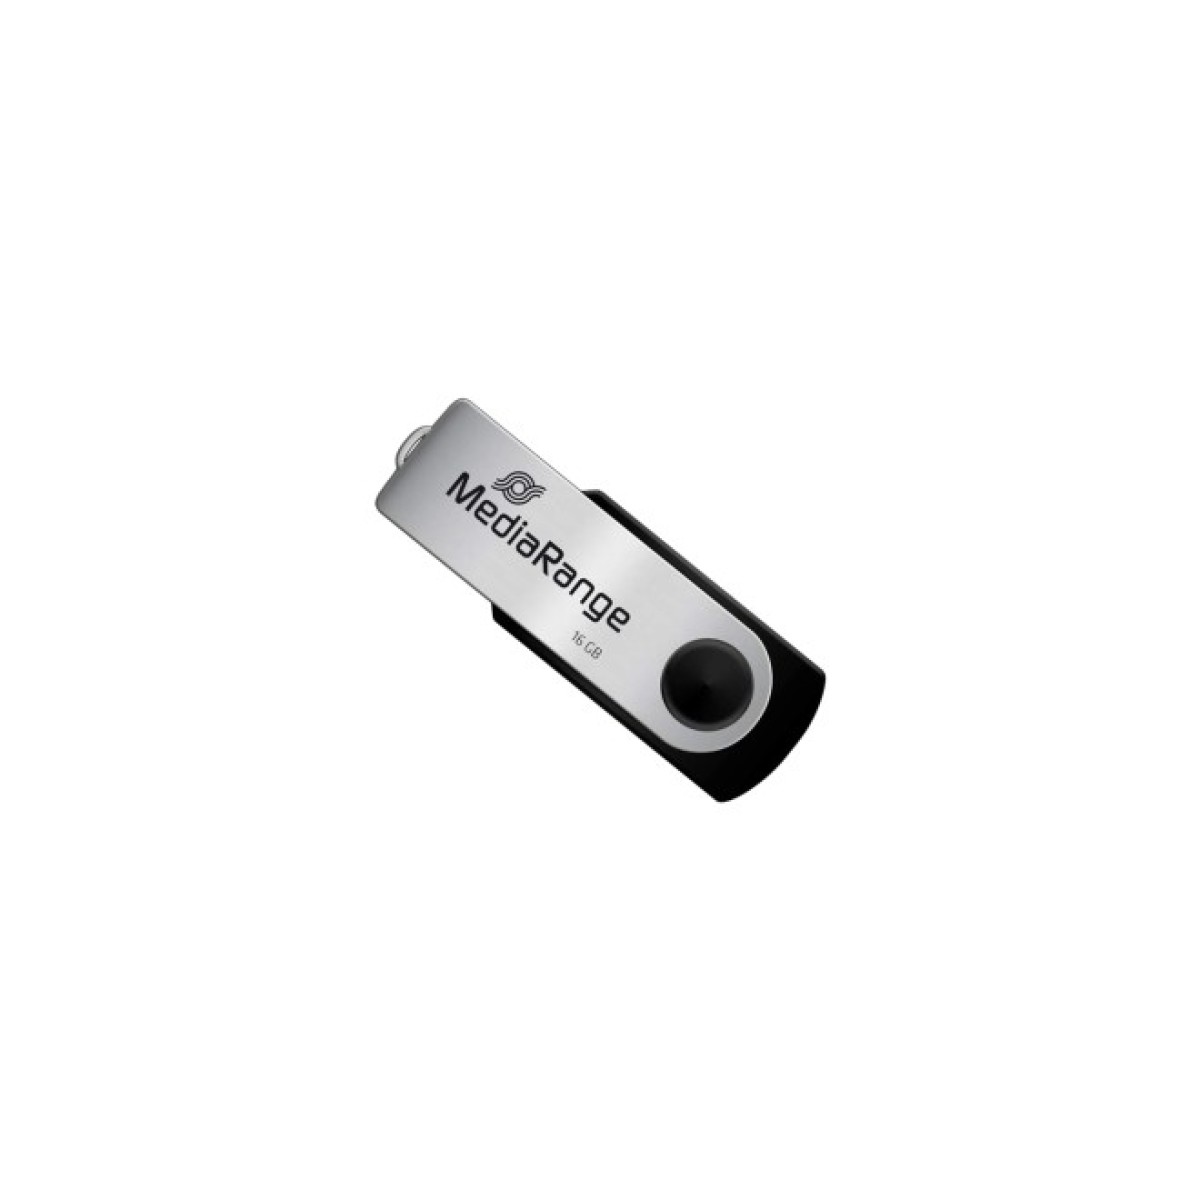 USB флеш накопитель Mediarange 16GB Black/Silver USB 2.0 (MR910) 256_256.jpg